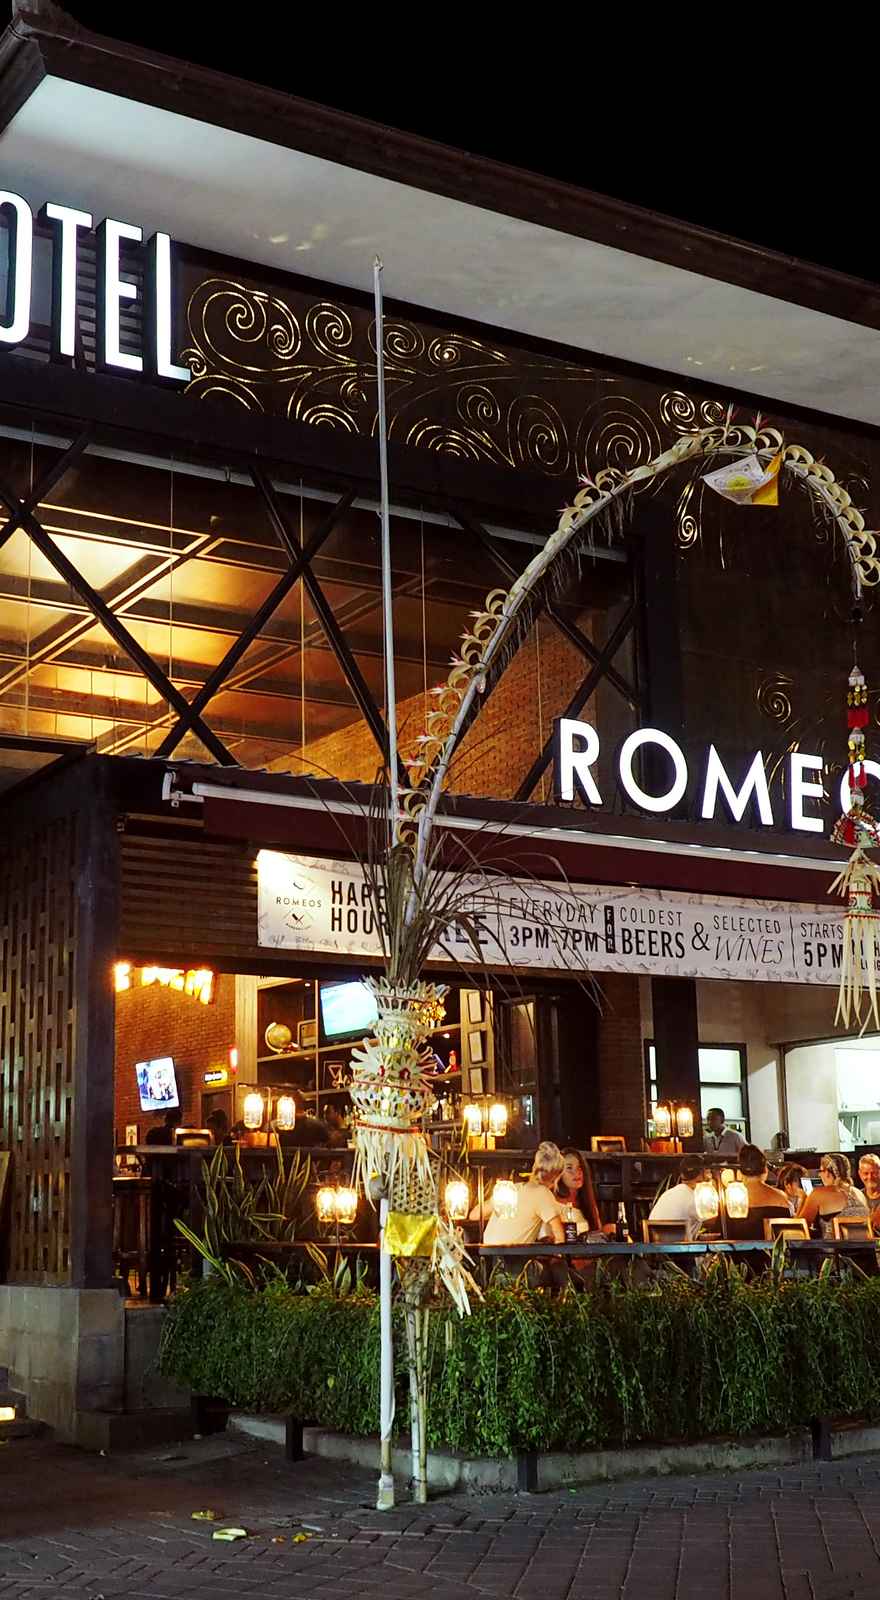 Romeos Bar & Grillery